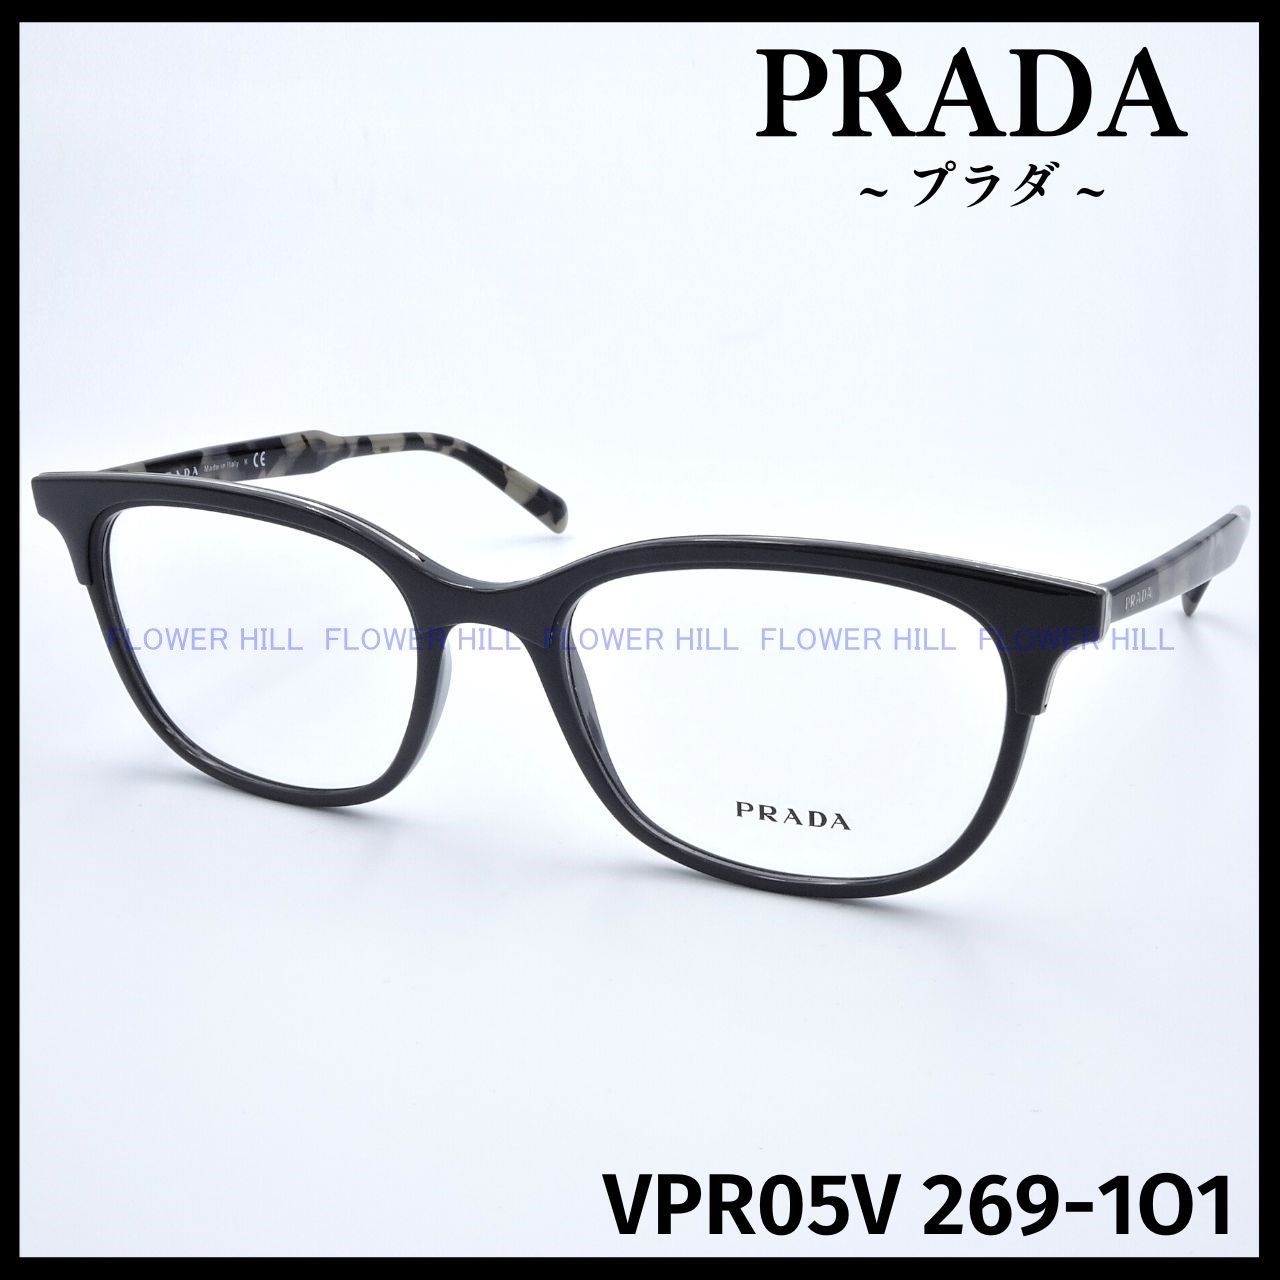 PRADA プラダ メガネ フレーム VPRV  ダークグレー・グレーハバナ ウェリントン サイズ イタリア製 メンズ レディース